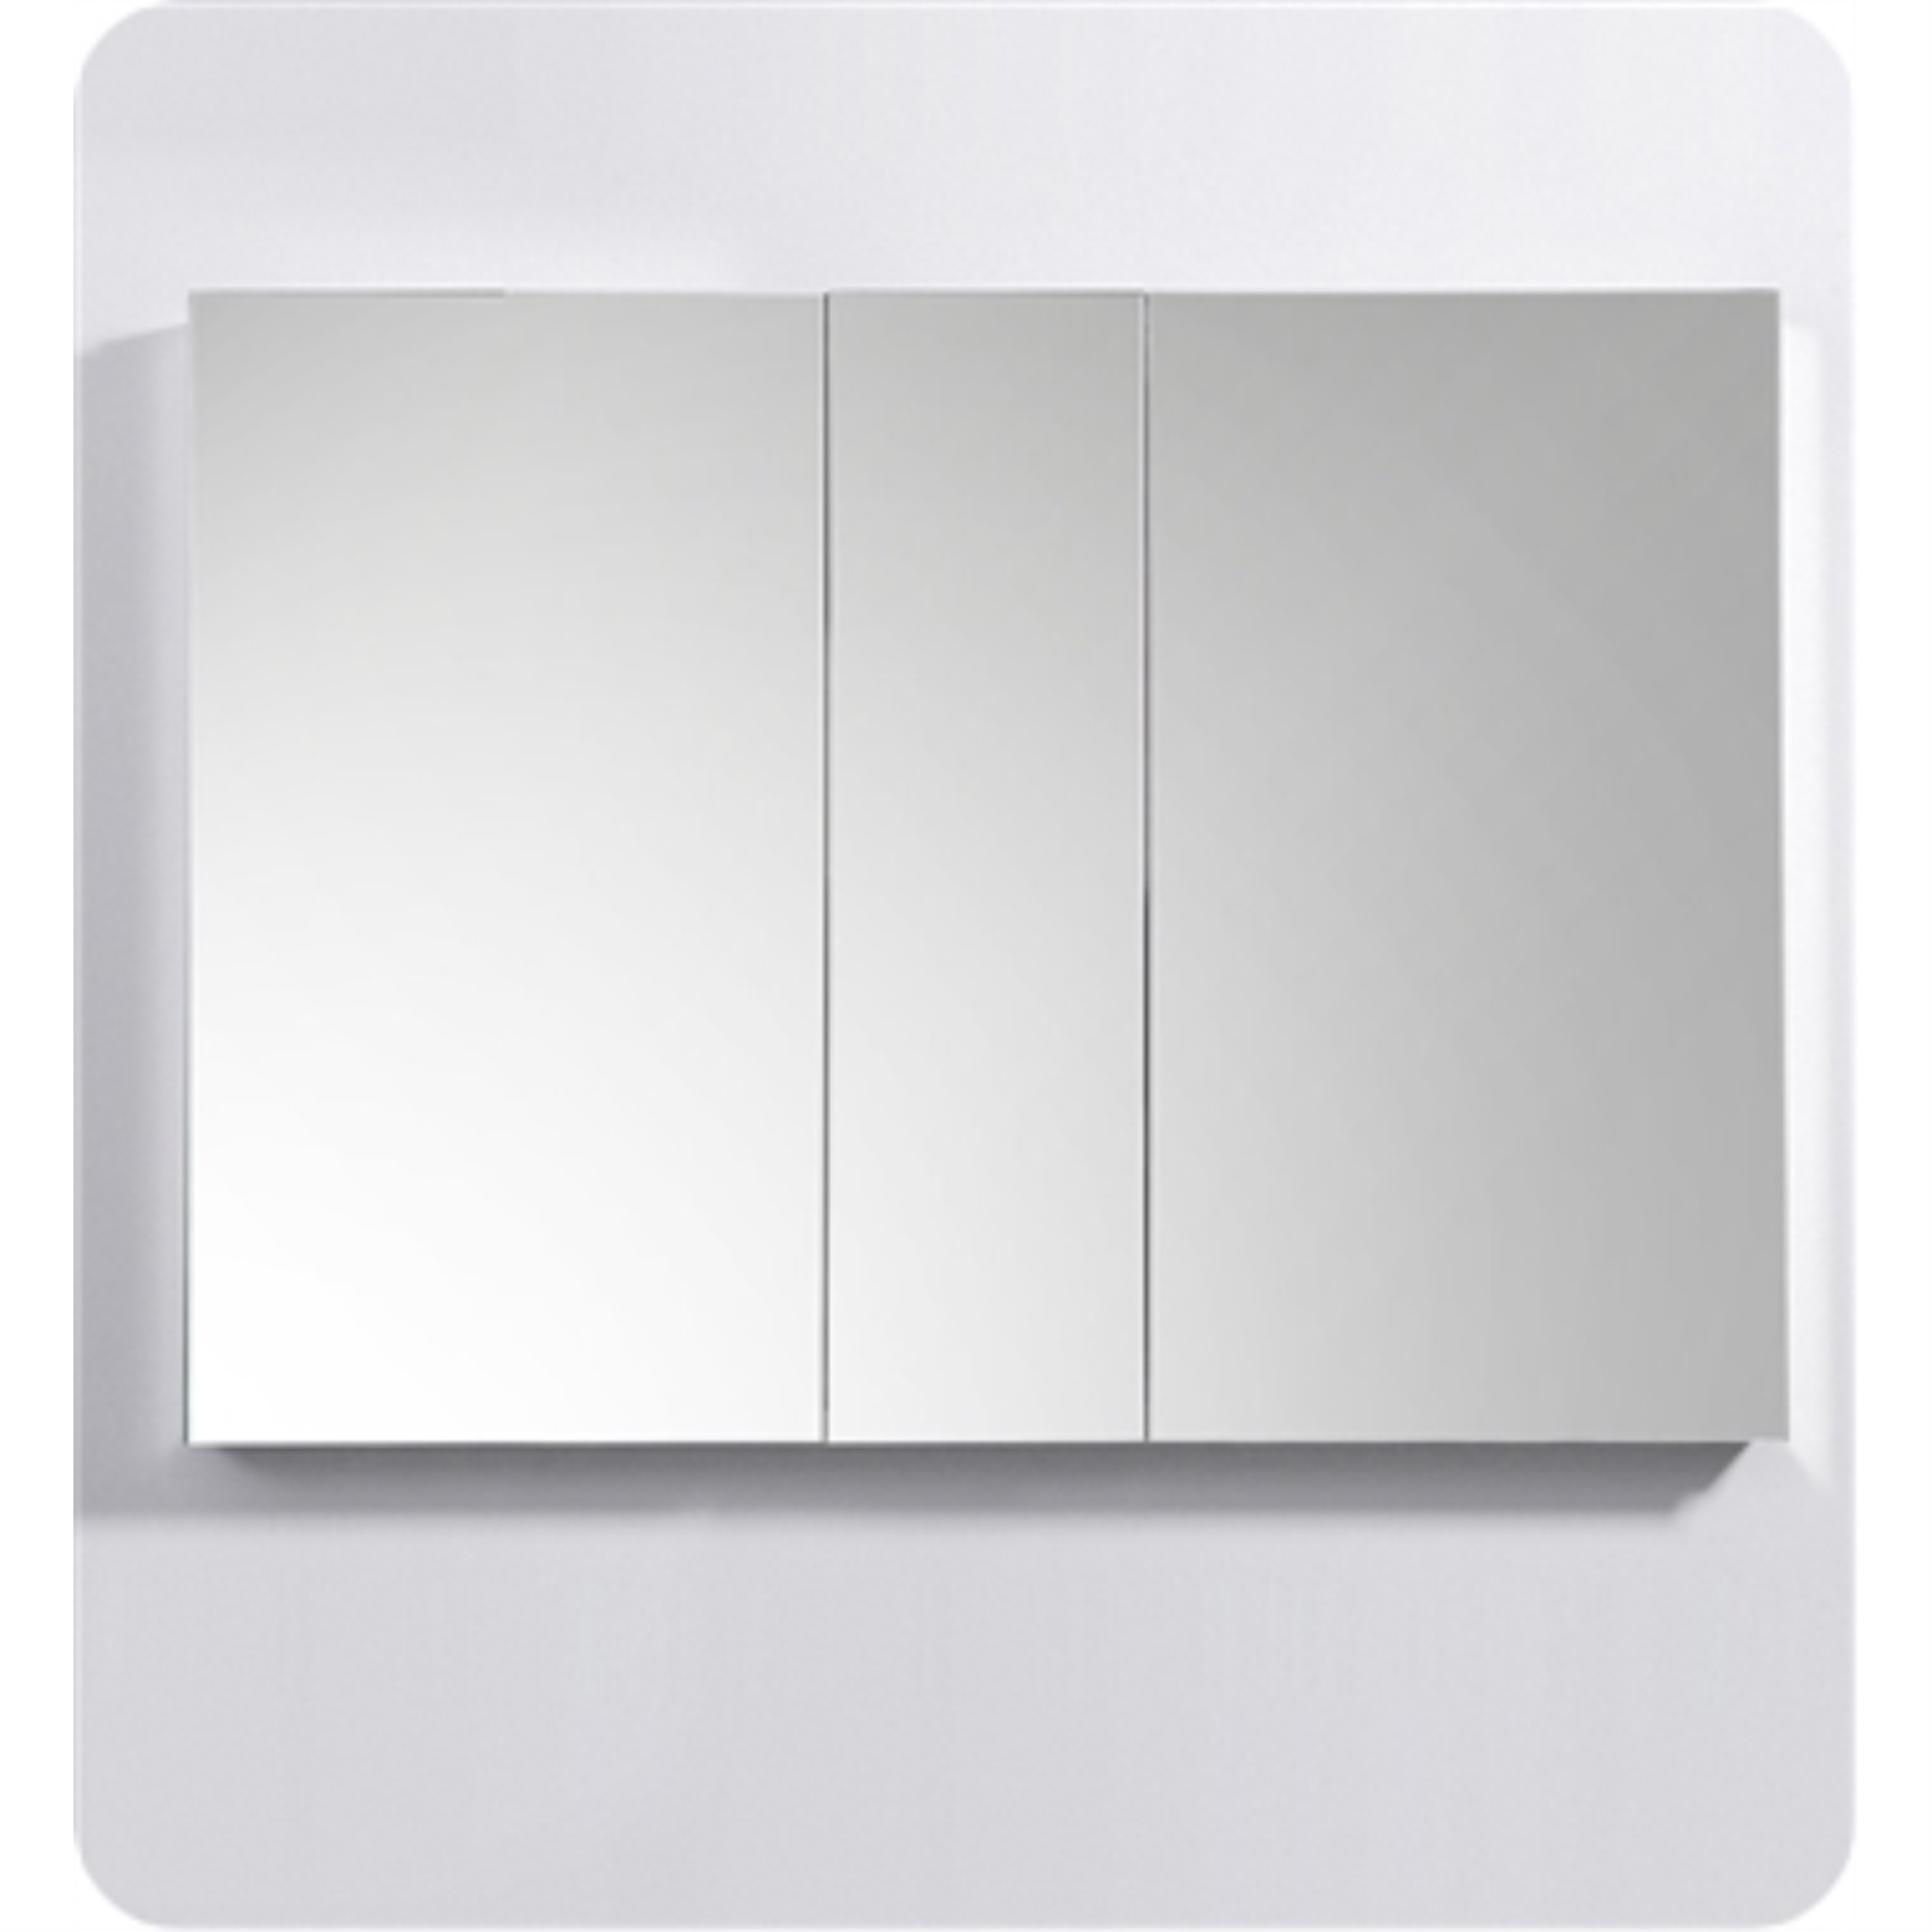 Fresca Senza 50" Aluminum Bathroom Medicine Cabinet with Mirrors in Mirrored - image 3 of 3